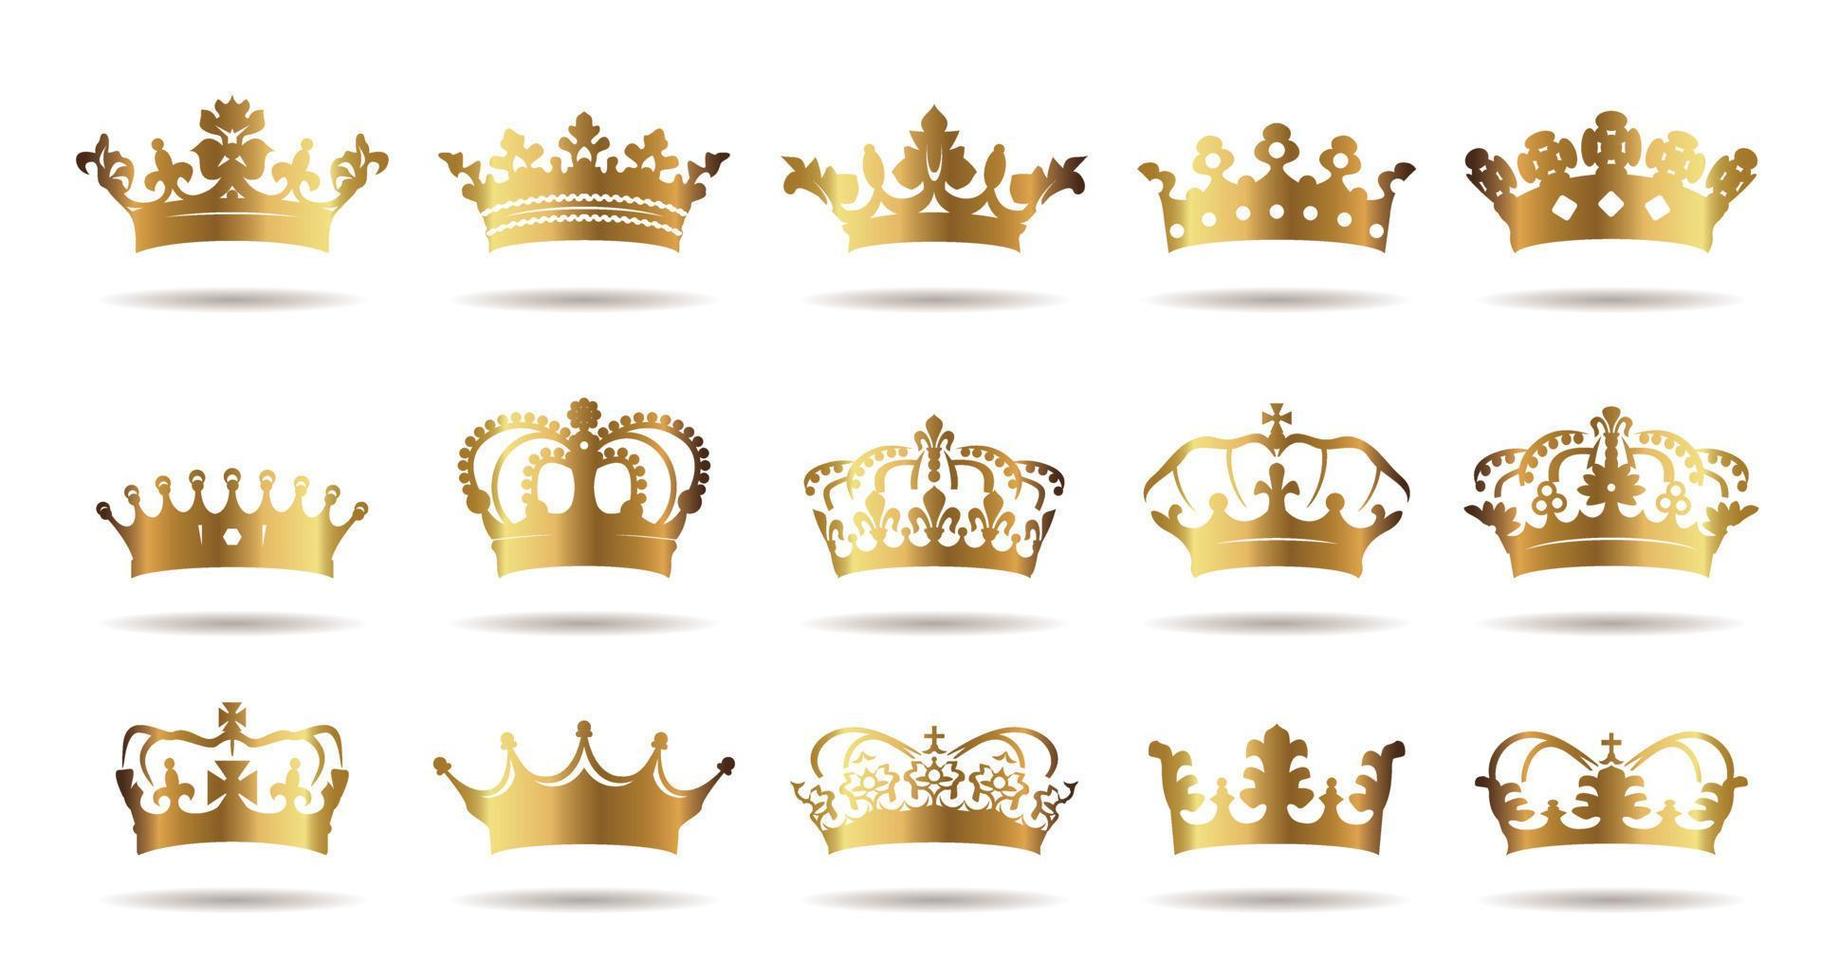 Set of vector king crowns on white background. Vector Illustration. Emblem and Royal symbols.